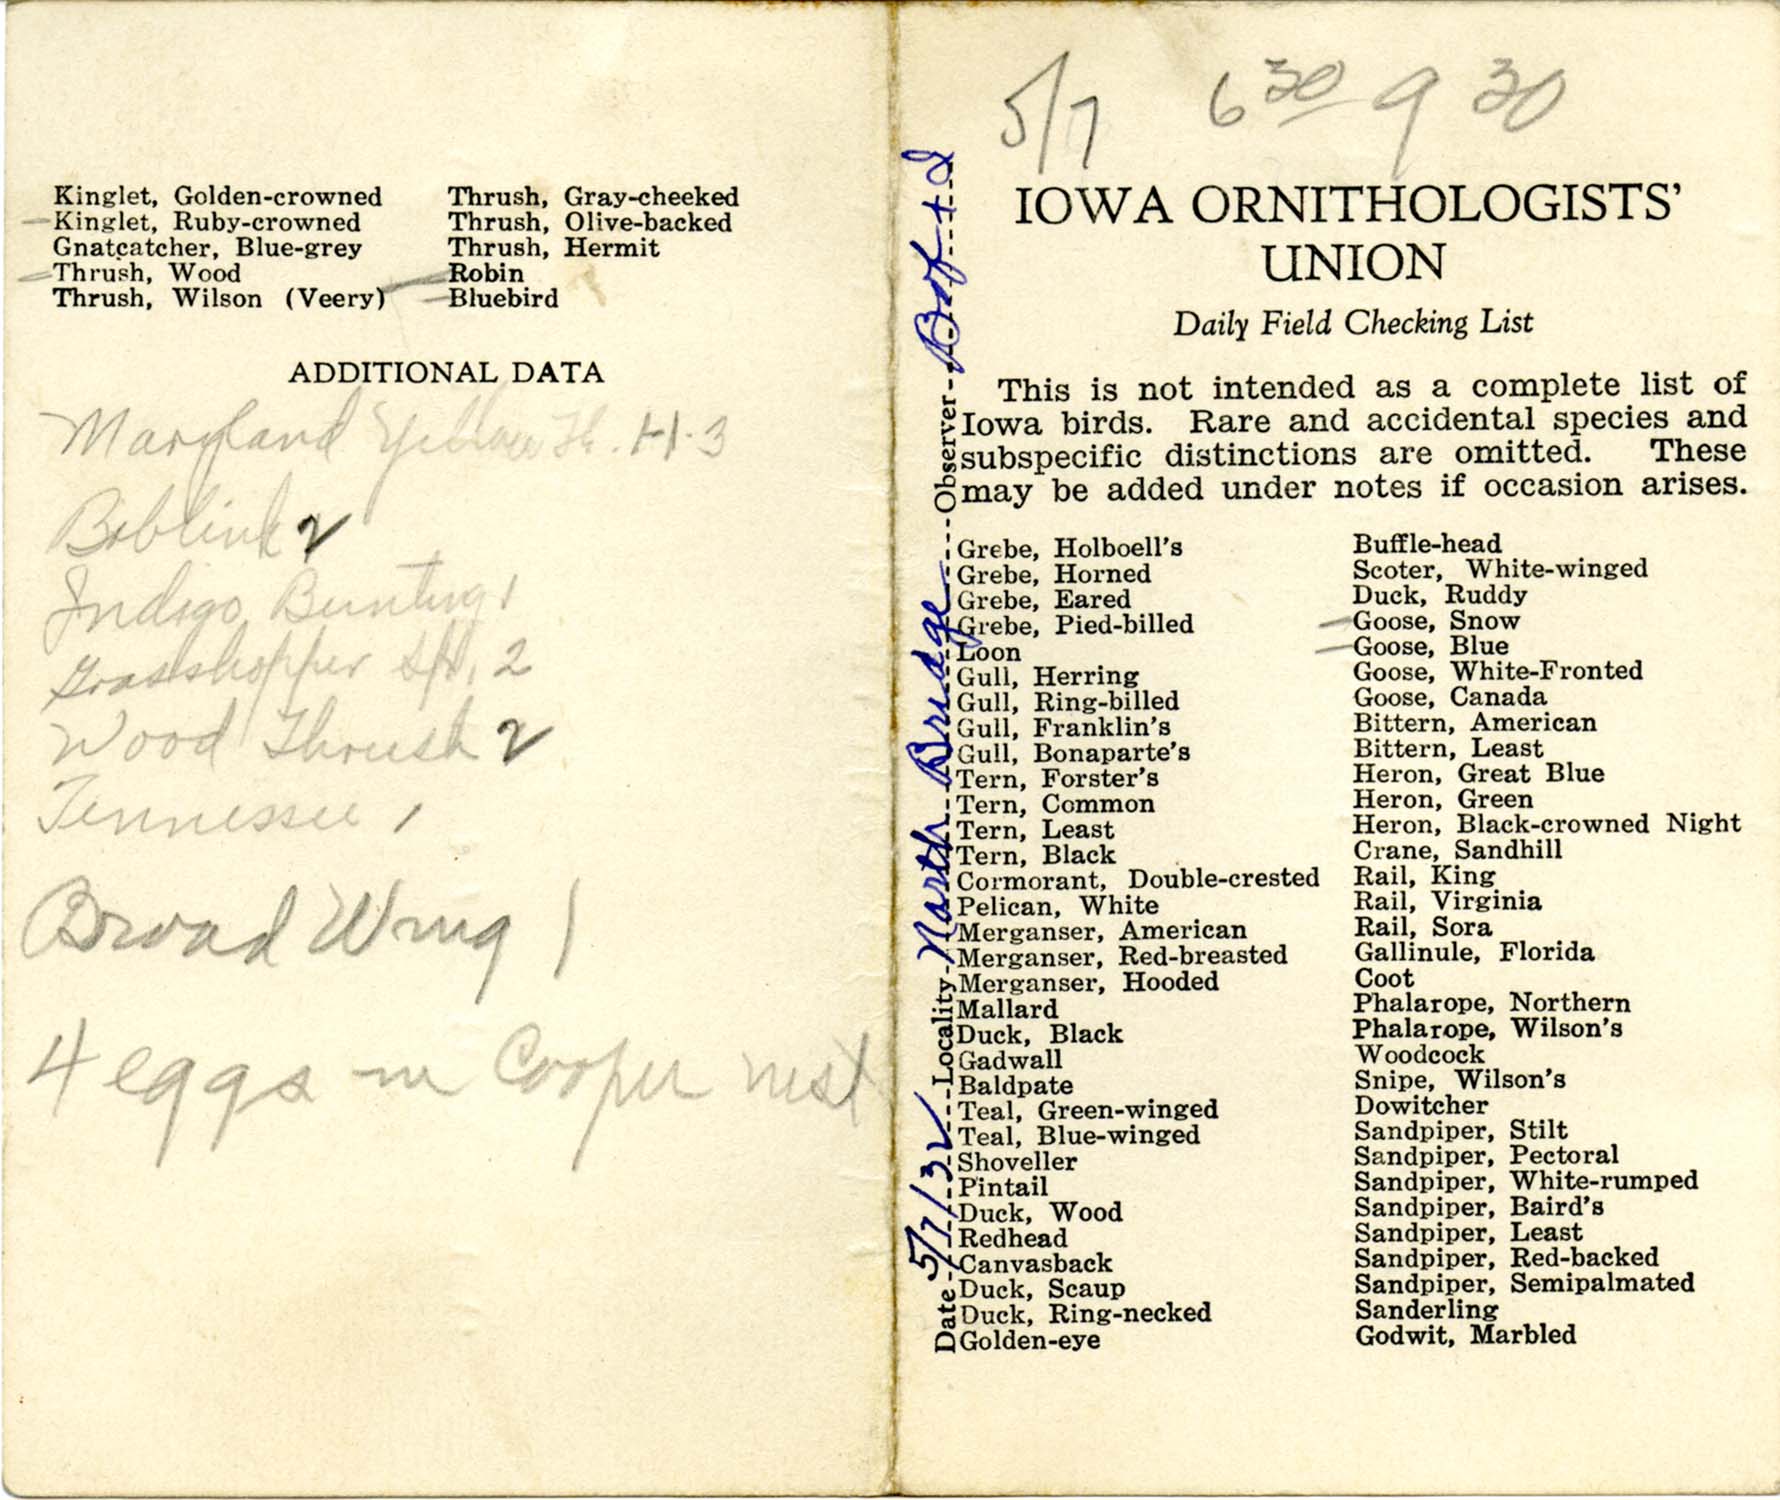 Daily field checking list, Walter Rosene, May 7, 1932